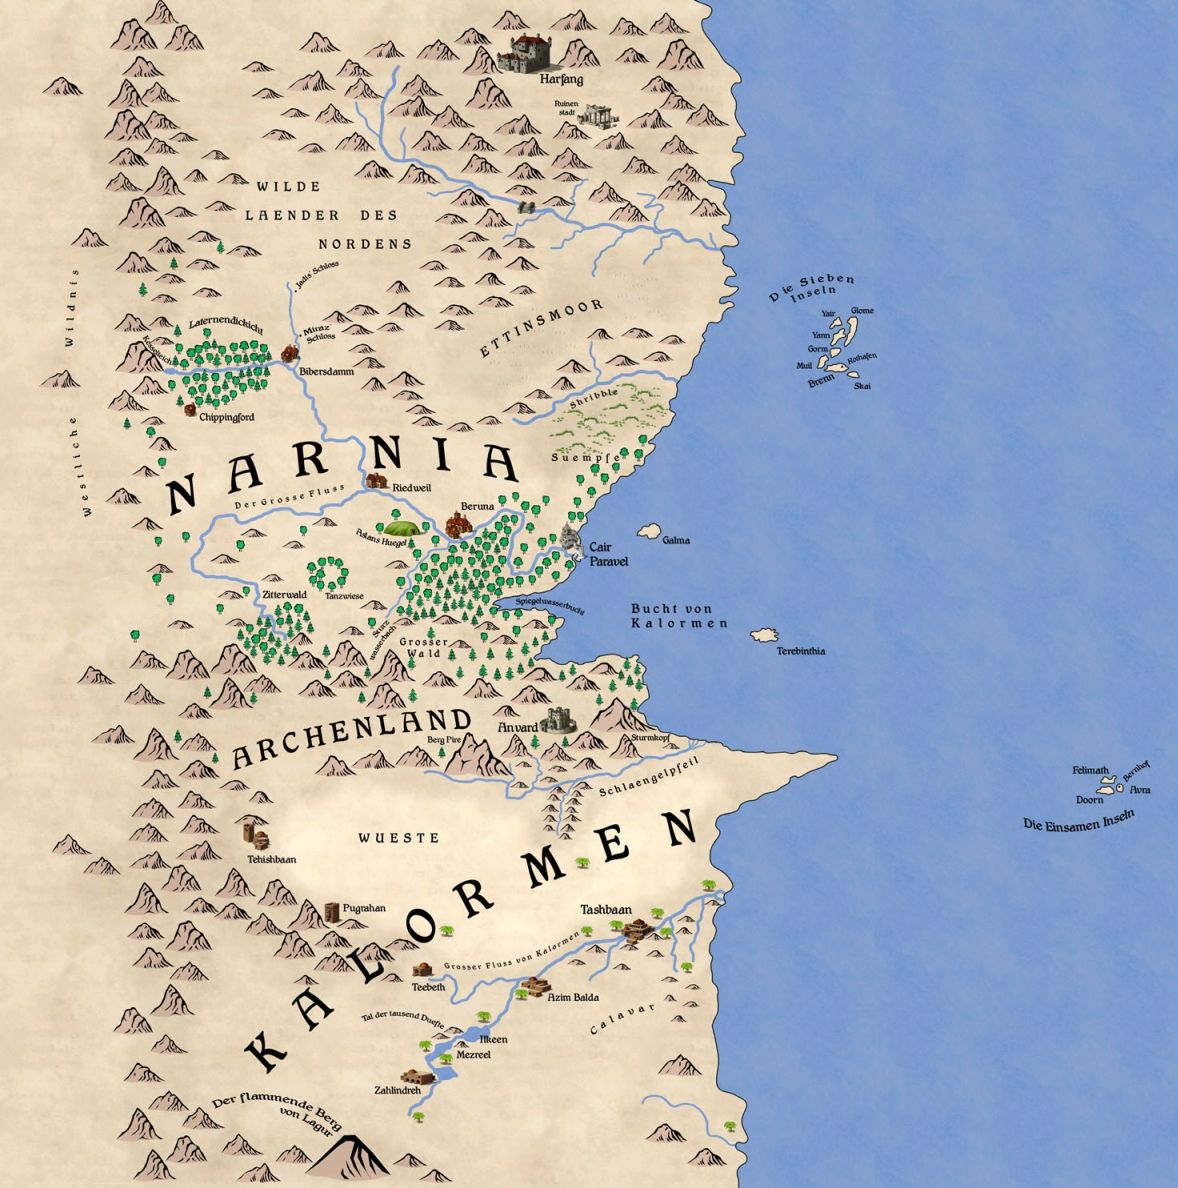 Map_of_Narnia_by_unhinged_gargoyle.jpg